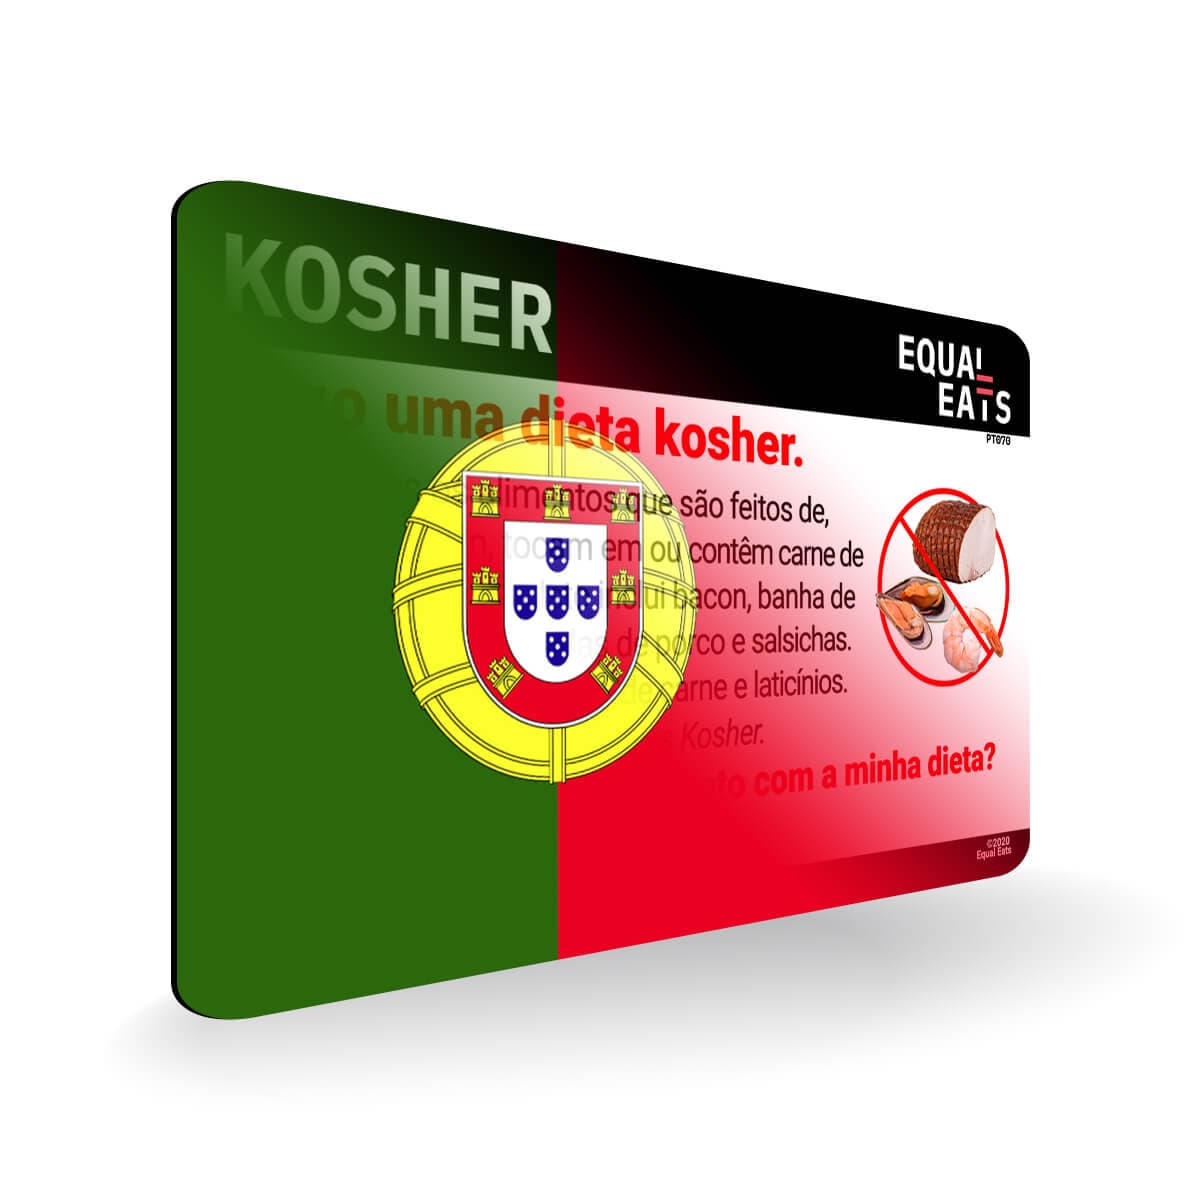 Kosher Diet in Portuguese. Kosher Card for Portugal